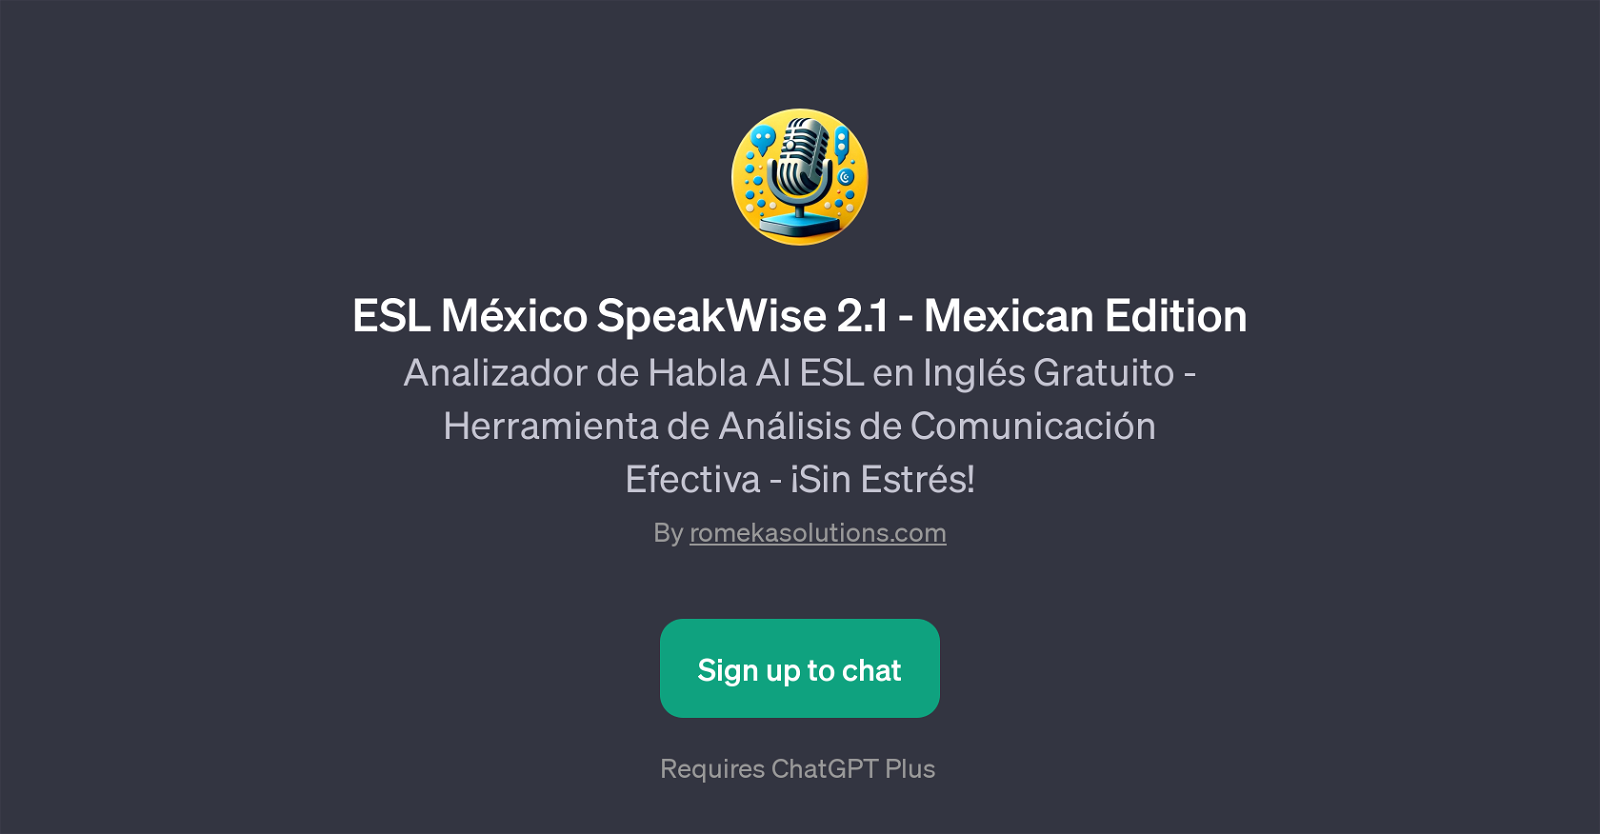 ESL Mxico SpeakWise 2.1 - Mexican Edition website